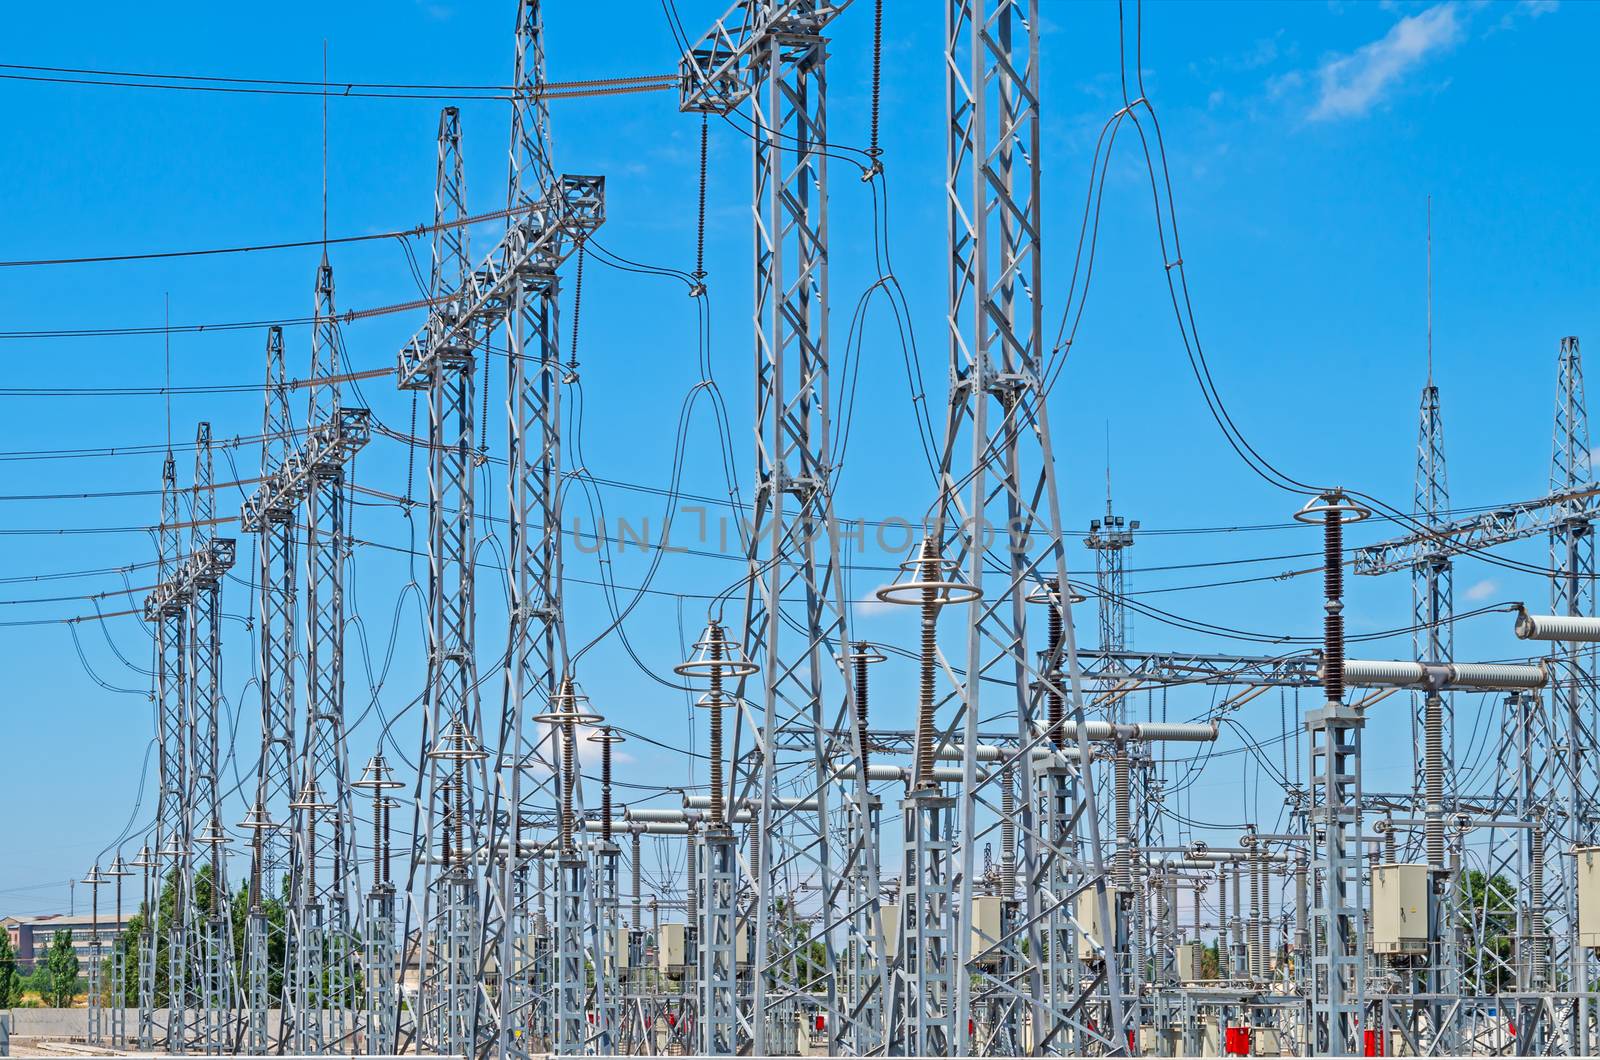 Image of high voltage transformer station against the blue sky.